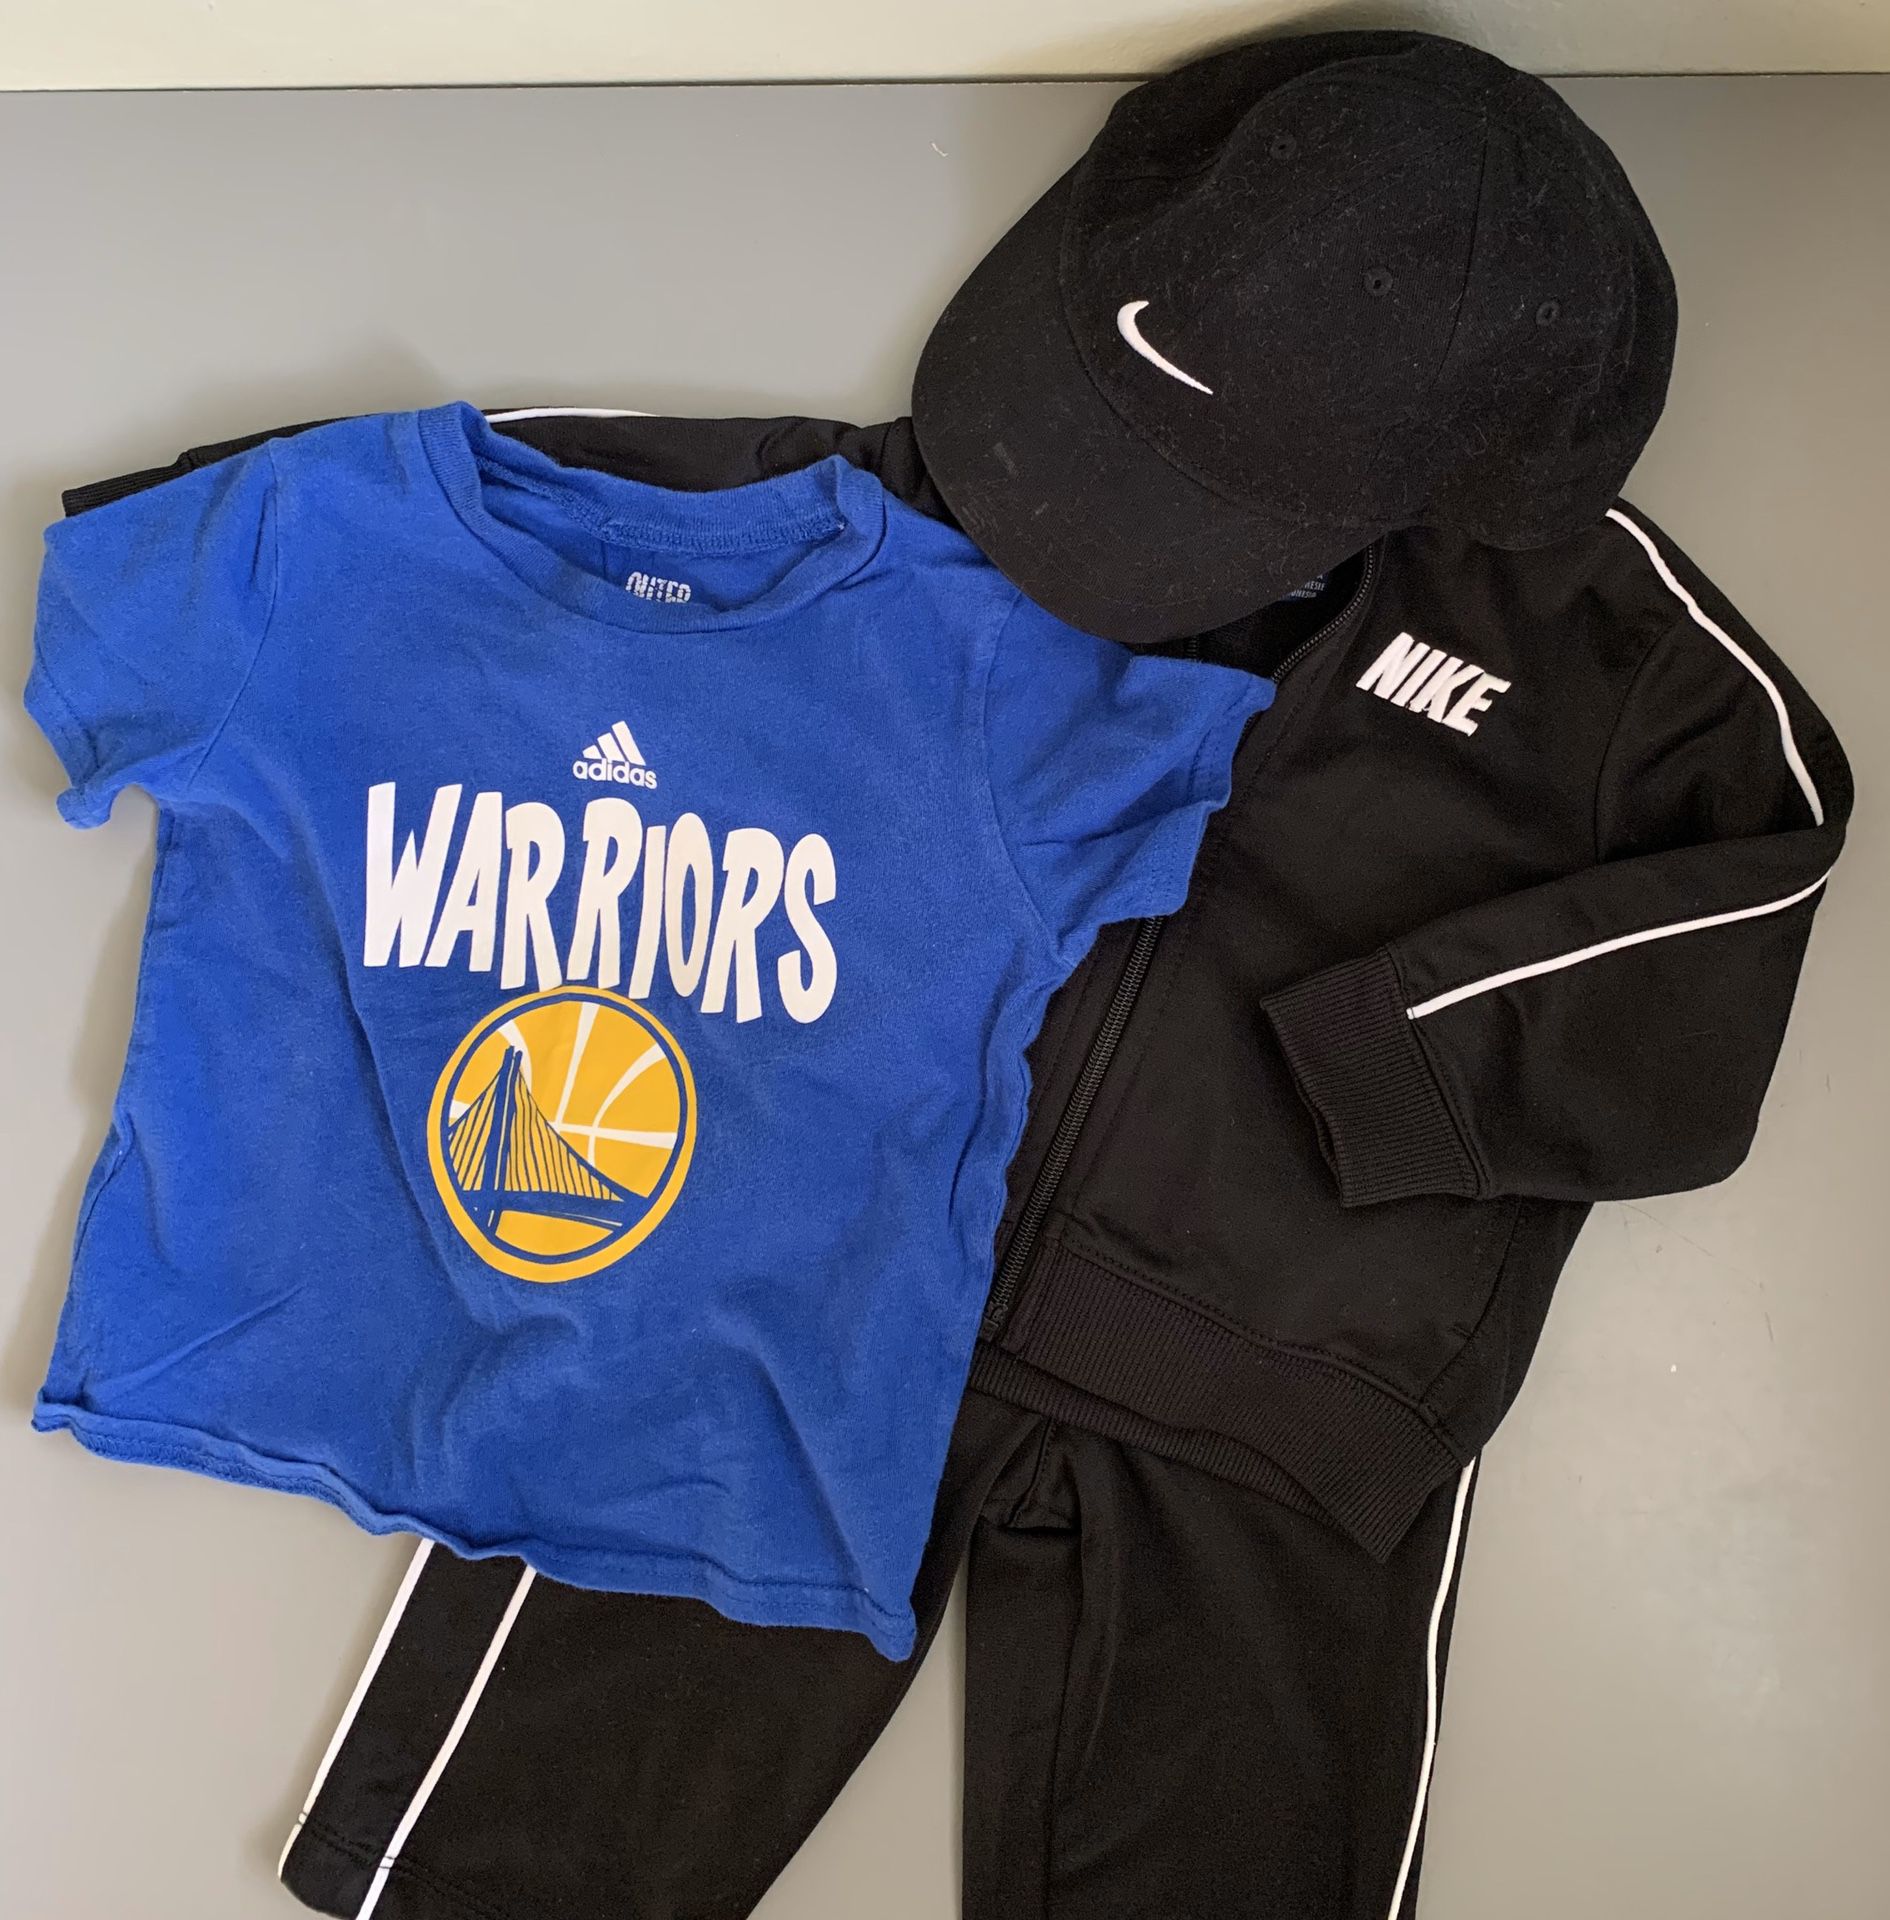 Nike Tracksuit & Baseball Cap with Warriors Tee-Shirt--12M